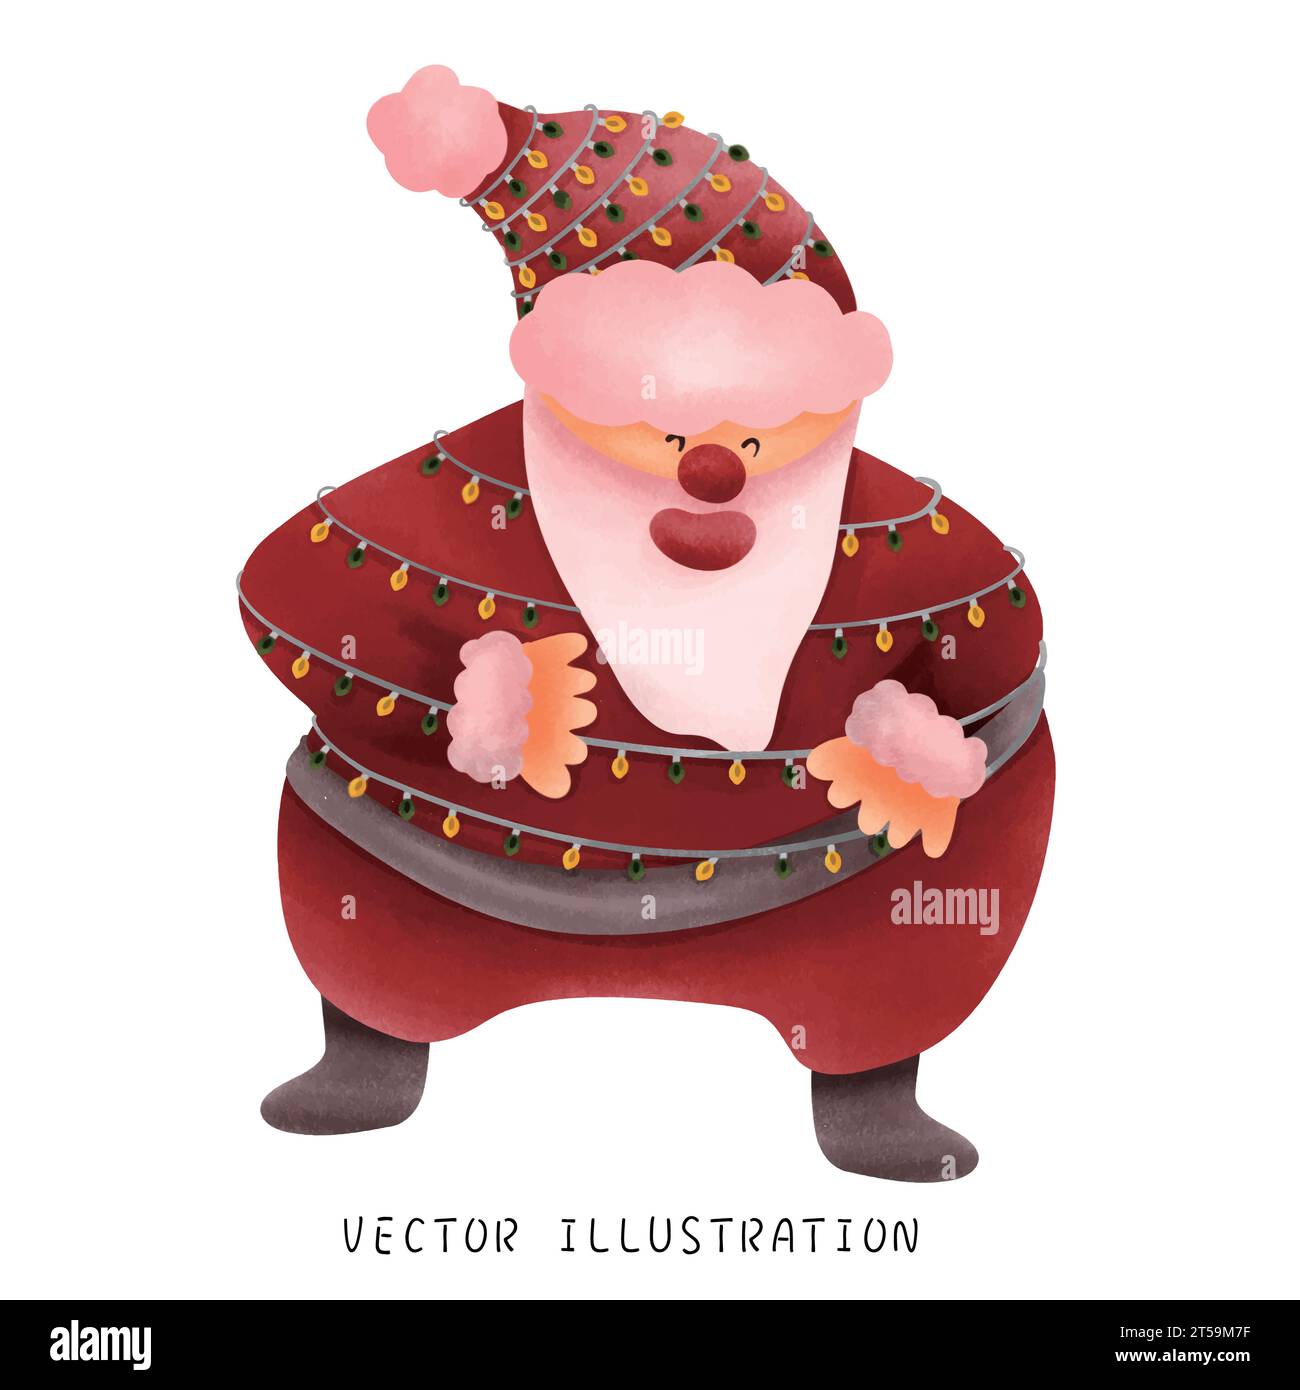 Hand Drawn Santa Claus and Festive Christmas Illustration Stock Vector